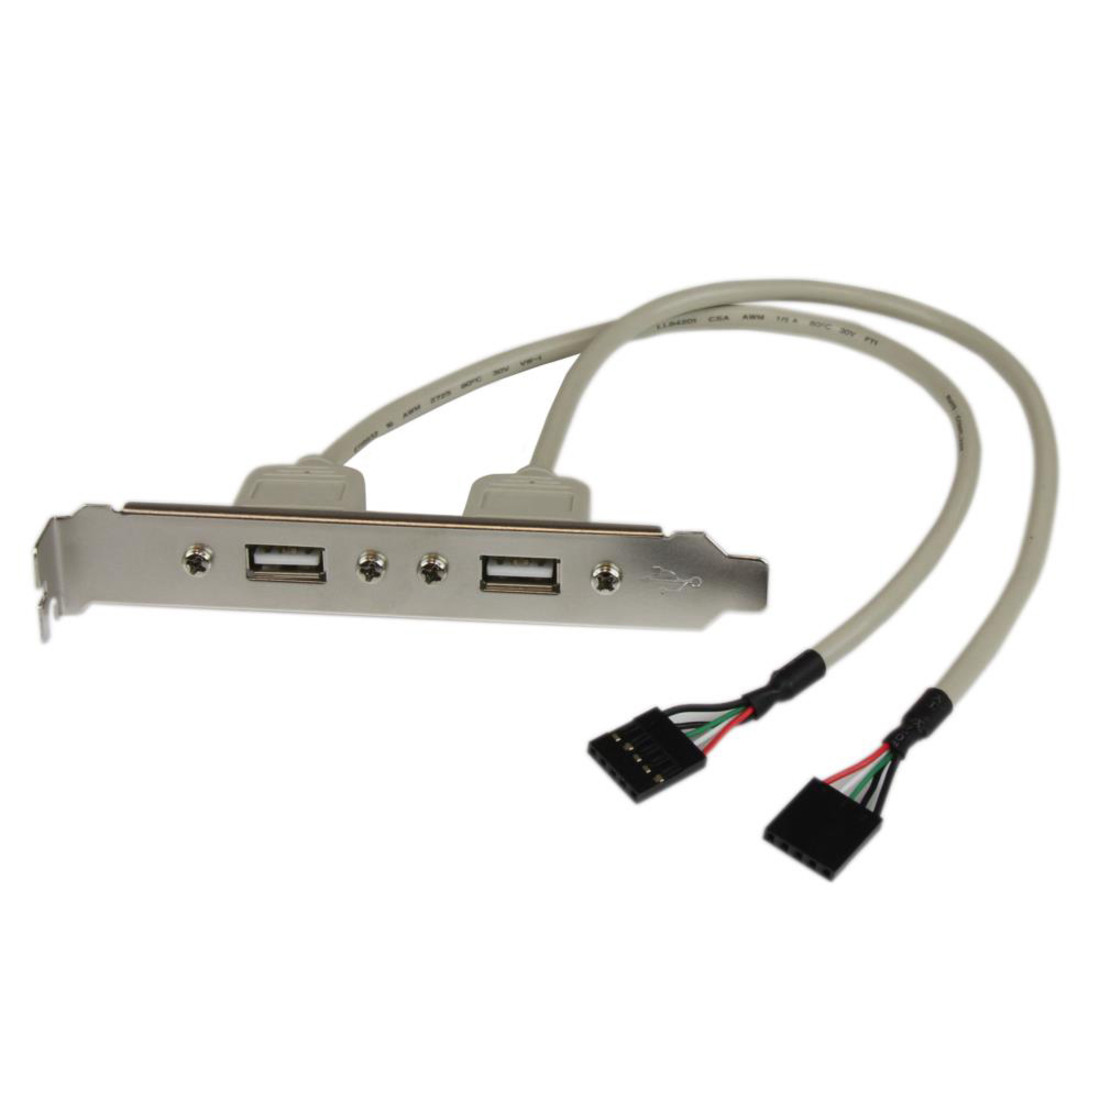 Startech .com 2 Port USB A Female Slot Plate AdapterType A Female USB11.25 USBPLATE